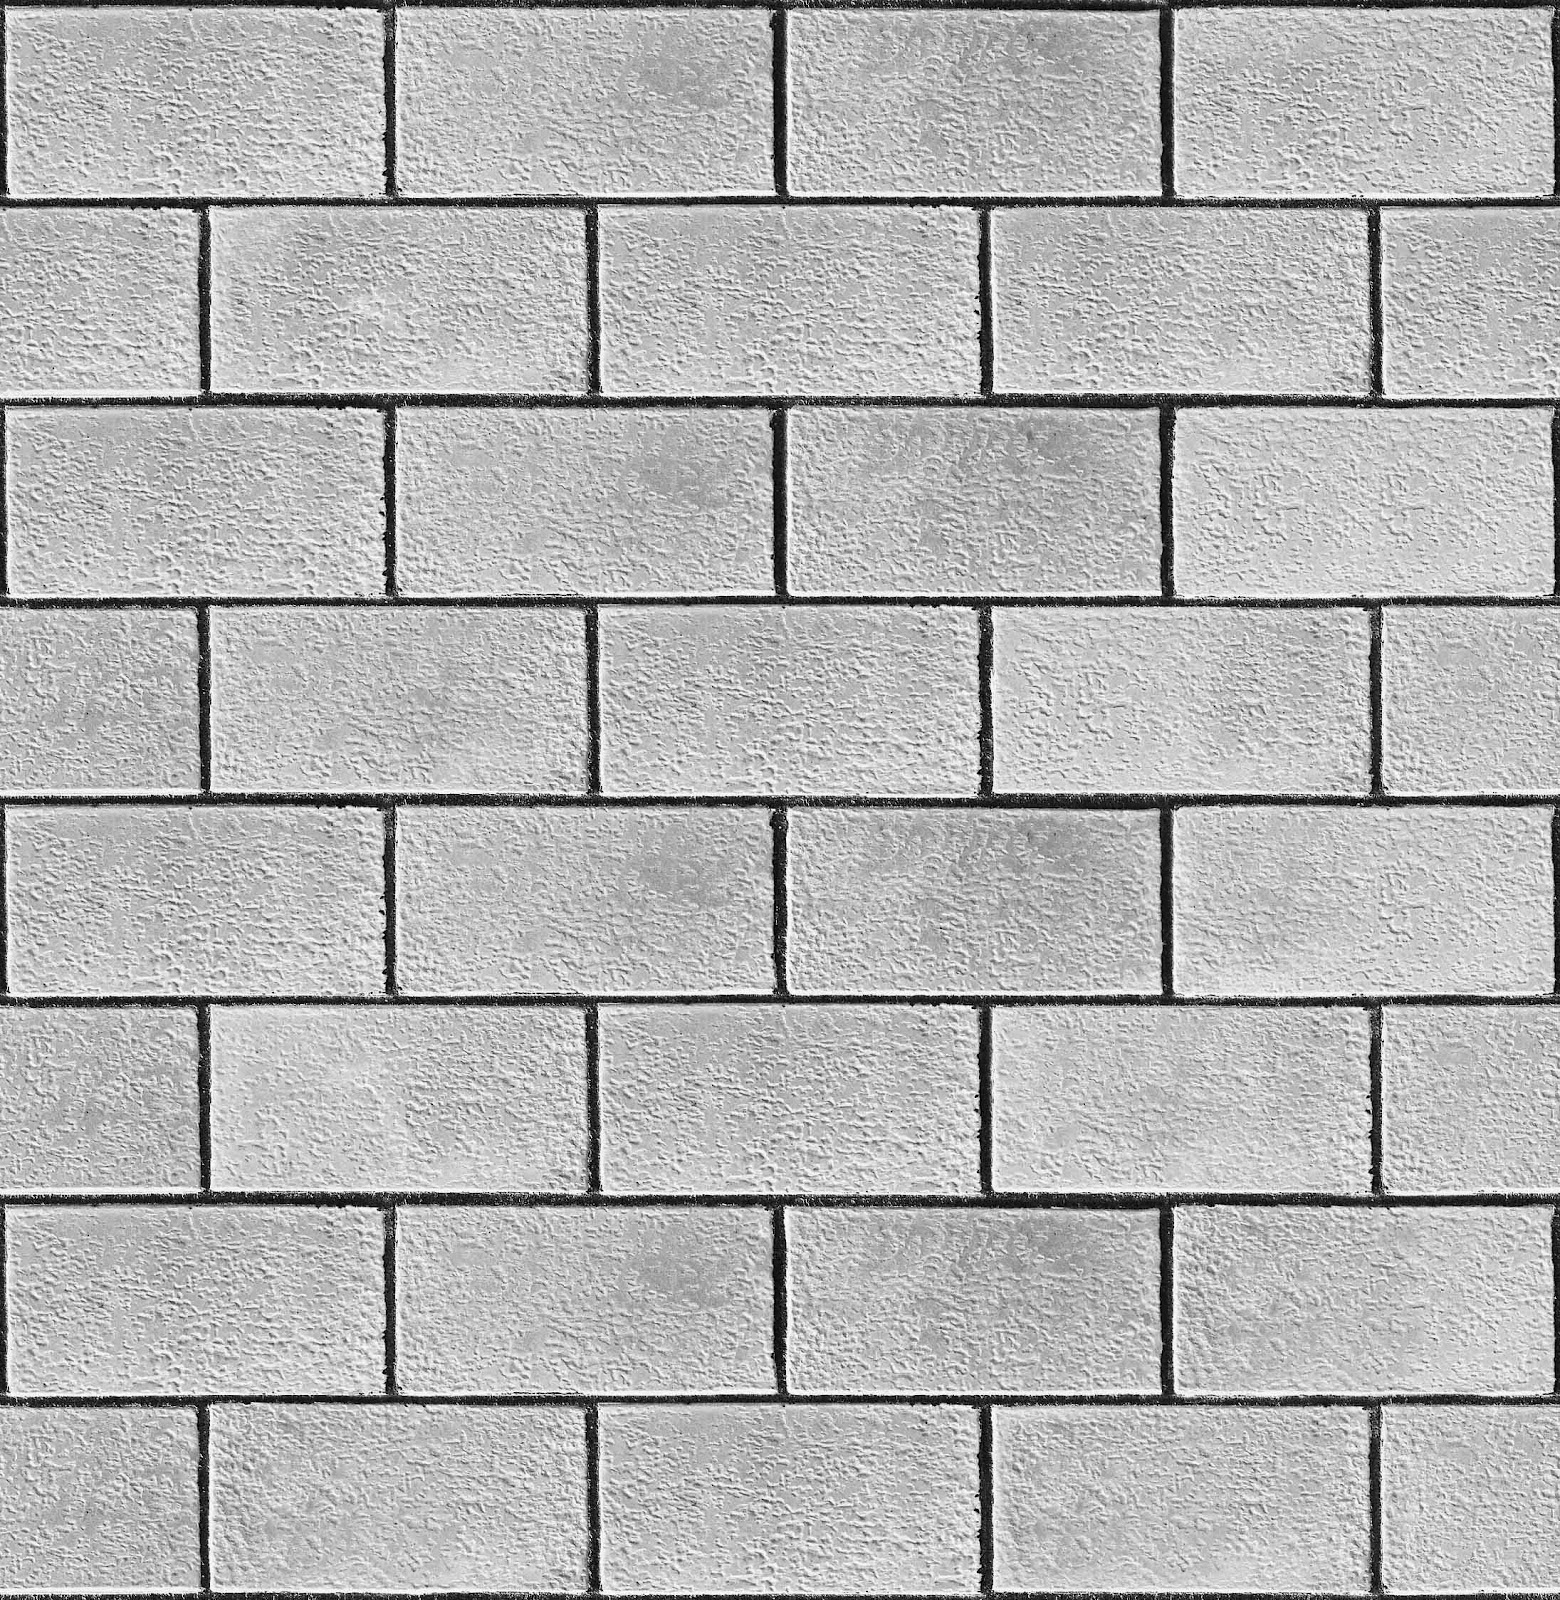 Texture free: Texture brick